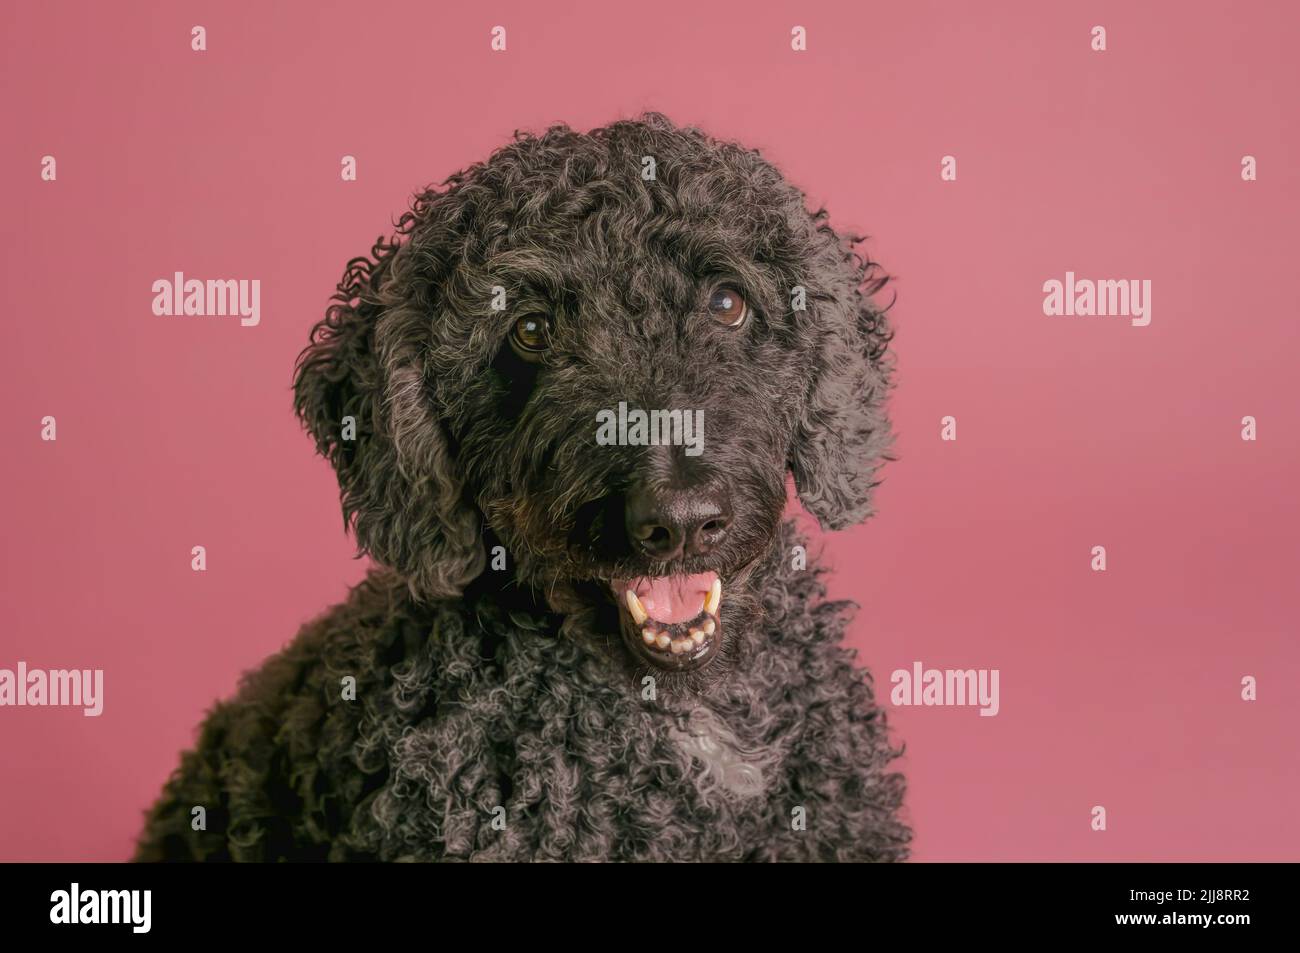 Formal studio portrait of a gorgeous black Labradoodle dog, photographed against a plain pink background Stock Photo